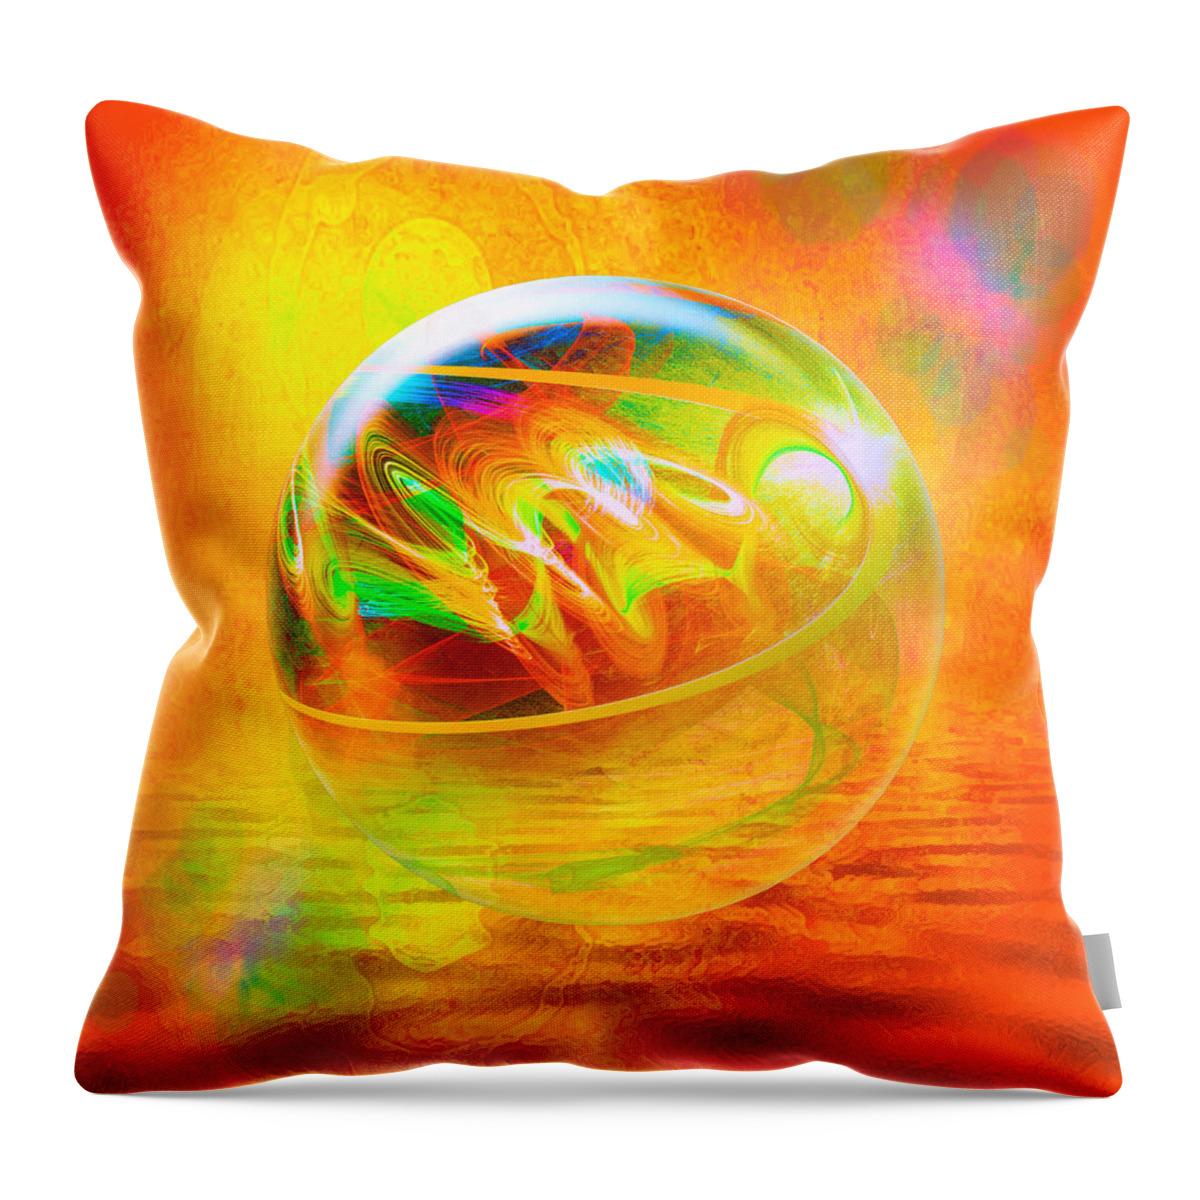 Orange Throw Pillow featuring the digital art Sun Bubble by Rick Wicker